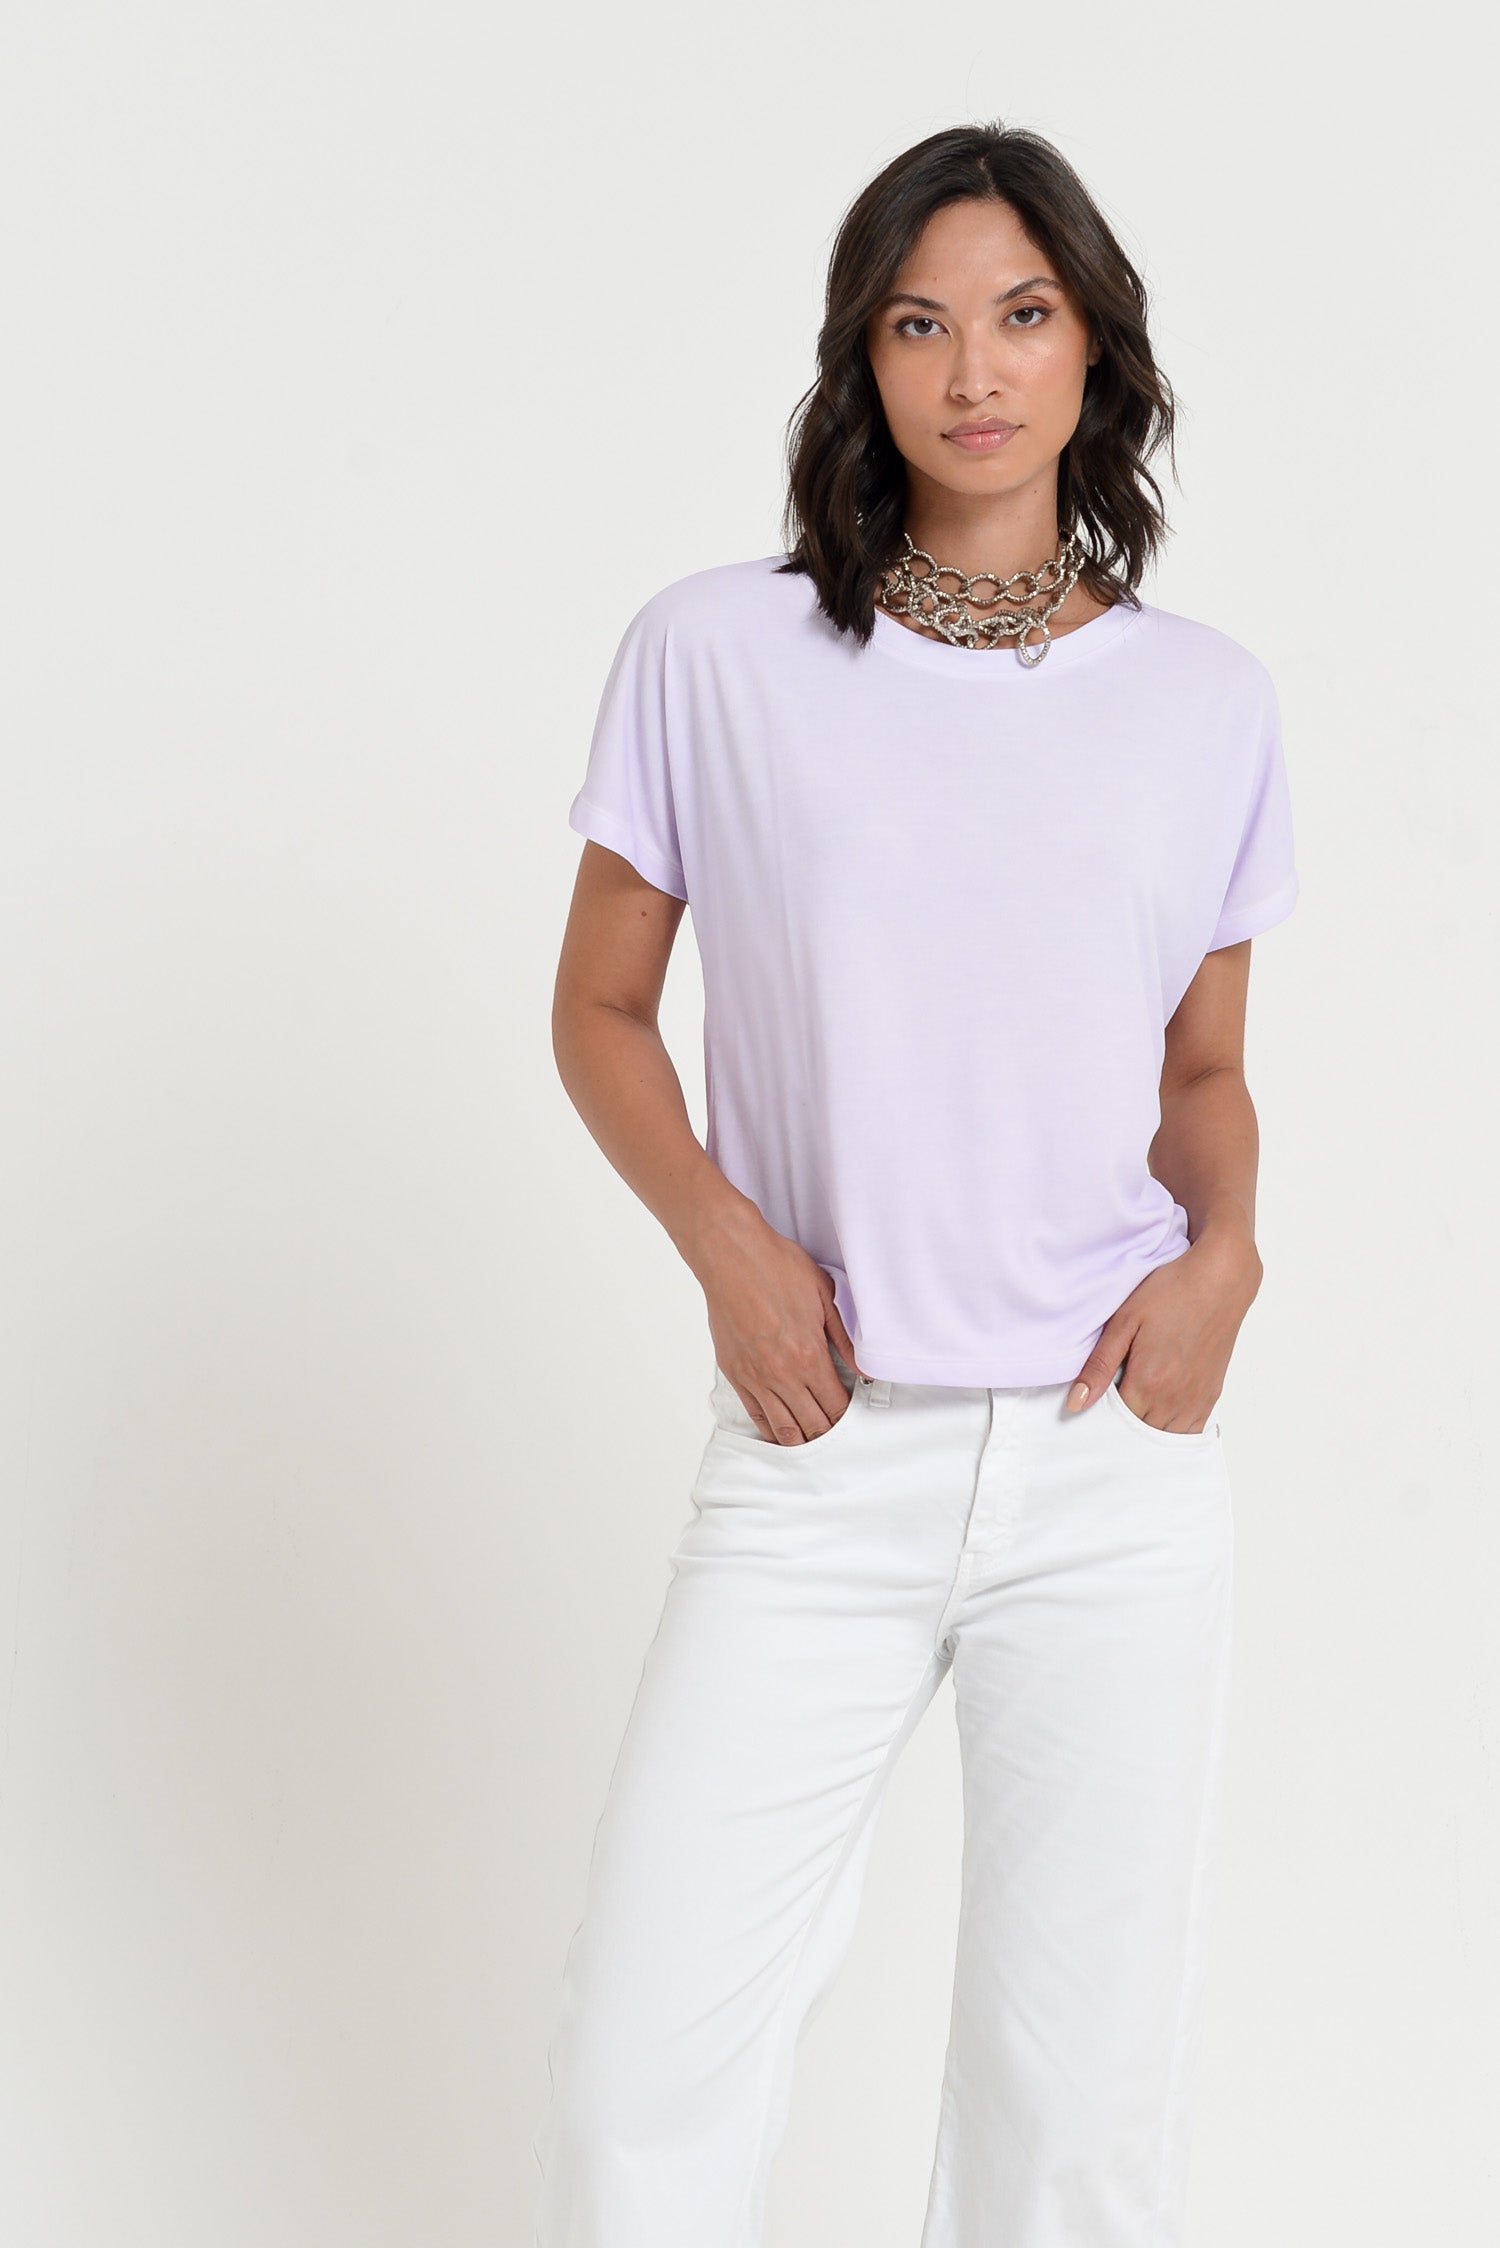 Vico T-Shirt - Women's Cotton T-Shirt - Lilac